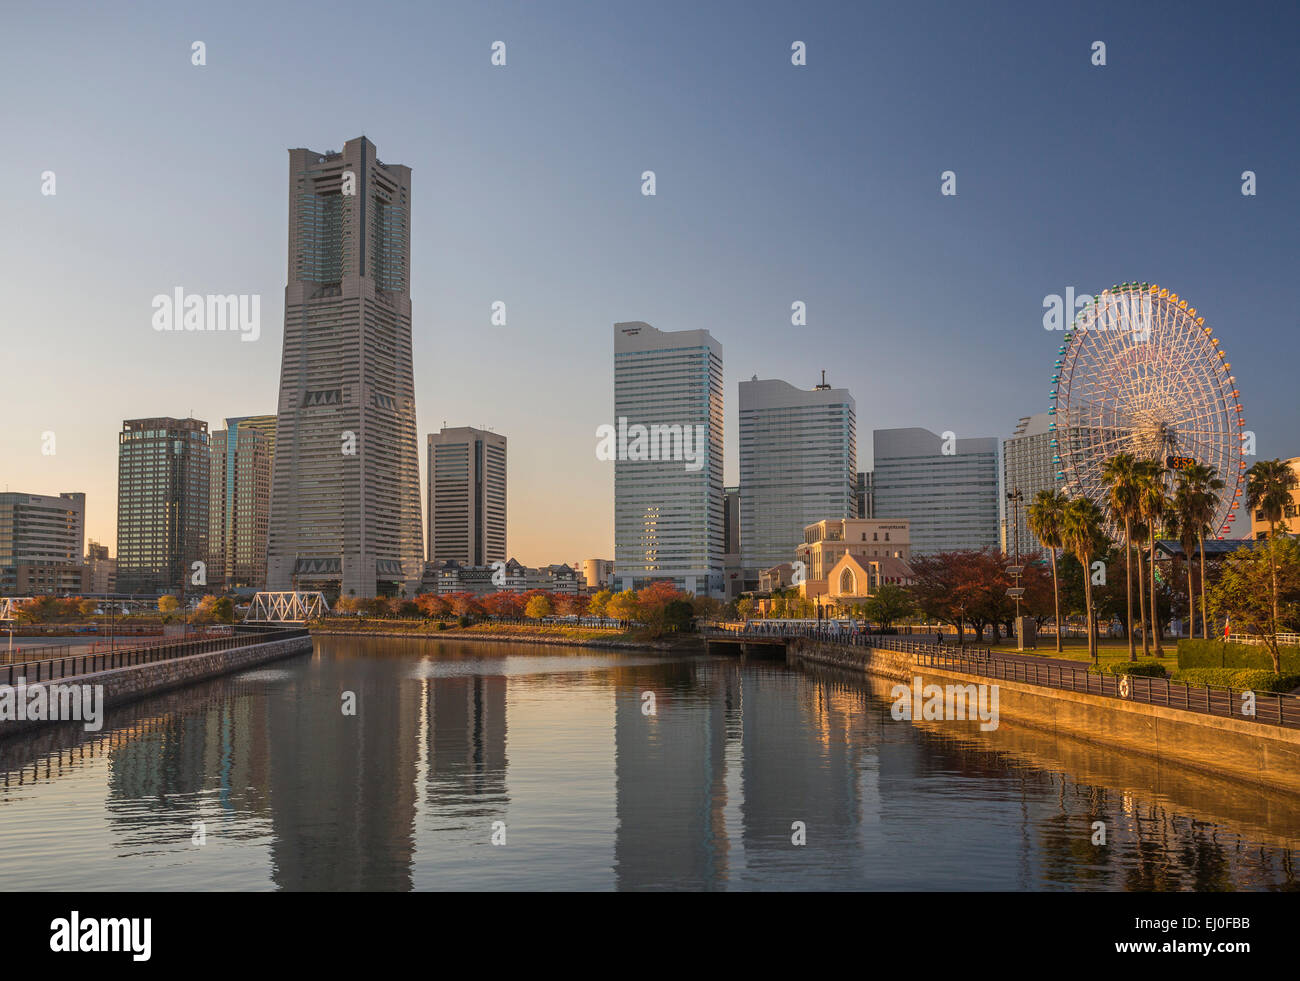 Building, Japan, Asia, Landmark, Yokohama, City, architecture, canal, ferris wheel, reflection, skyline, evening, warm Stock Photo